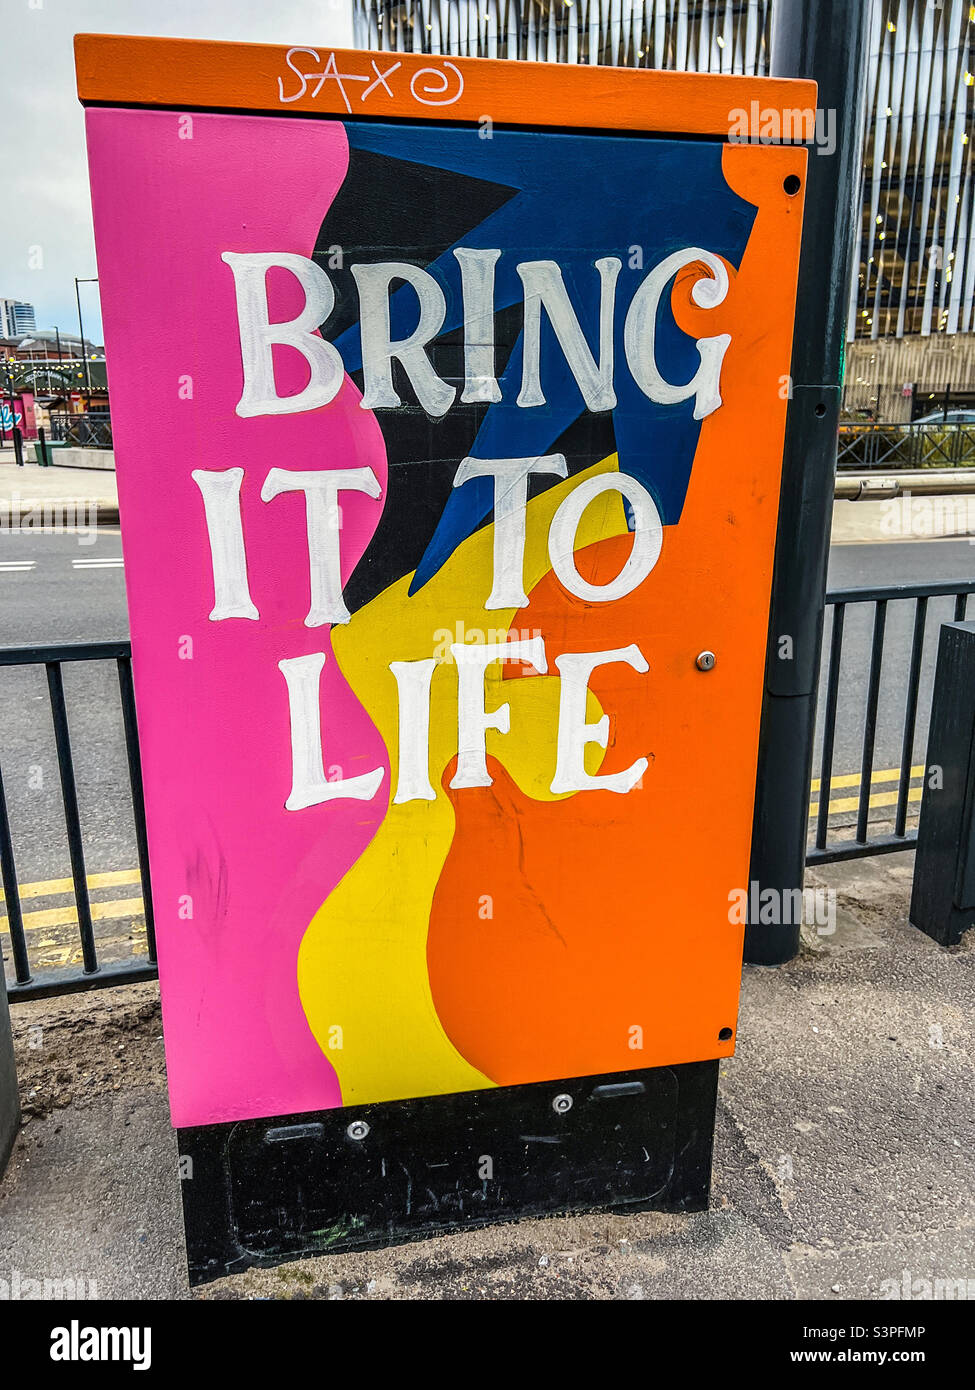 Bring it to life art graffiti on phone exchange box in Leeds Stock Photo